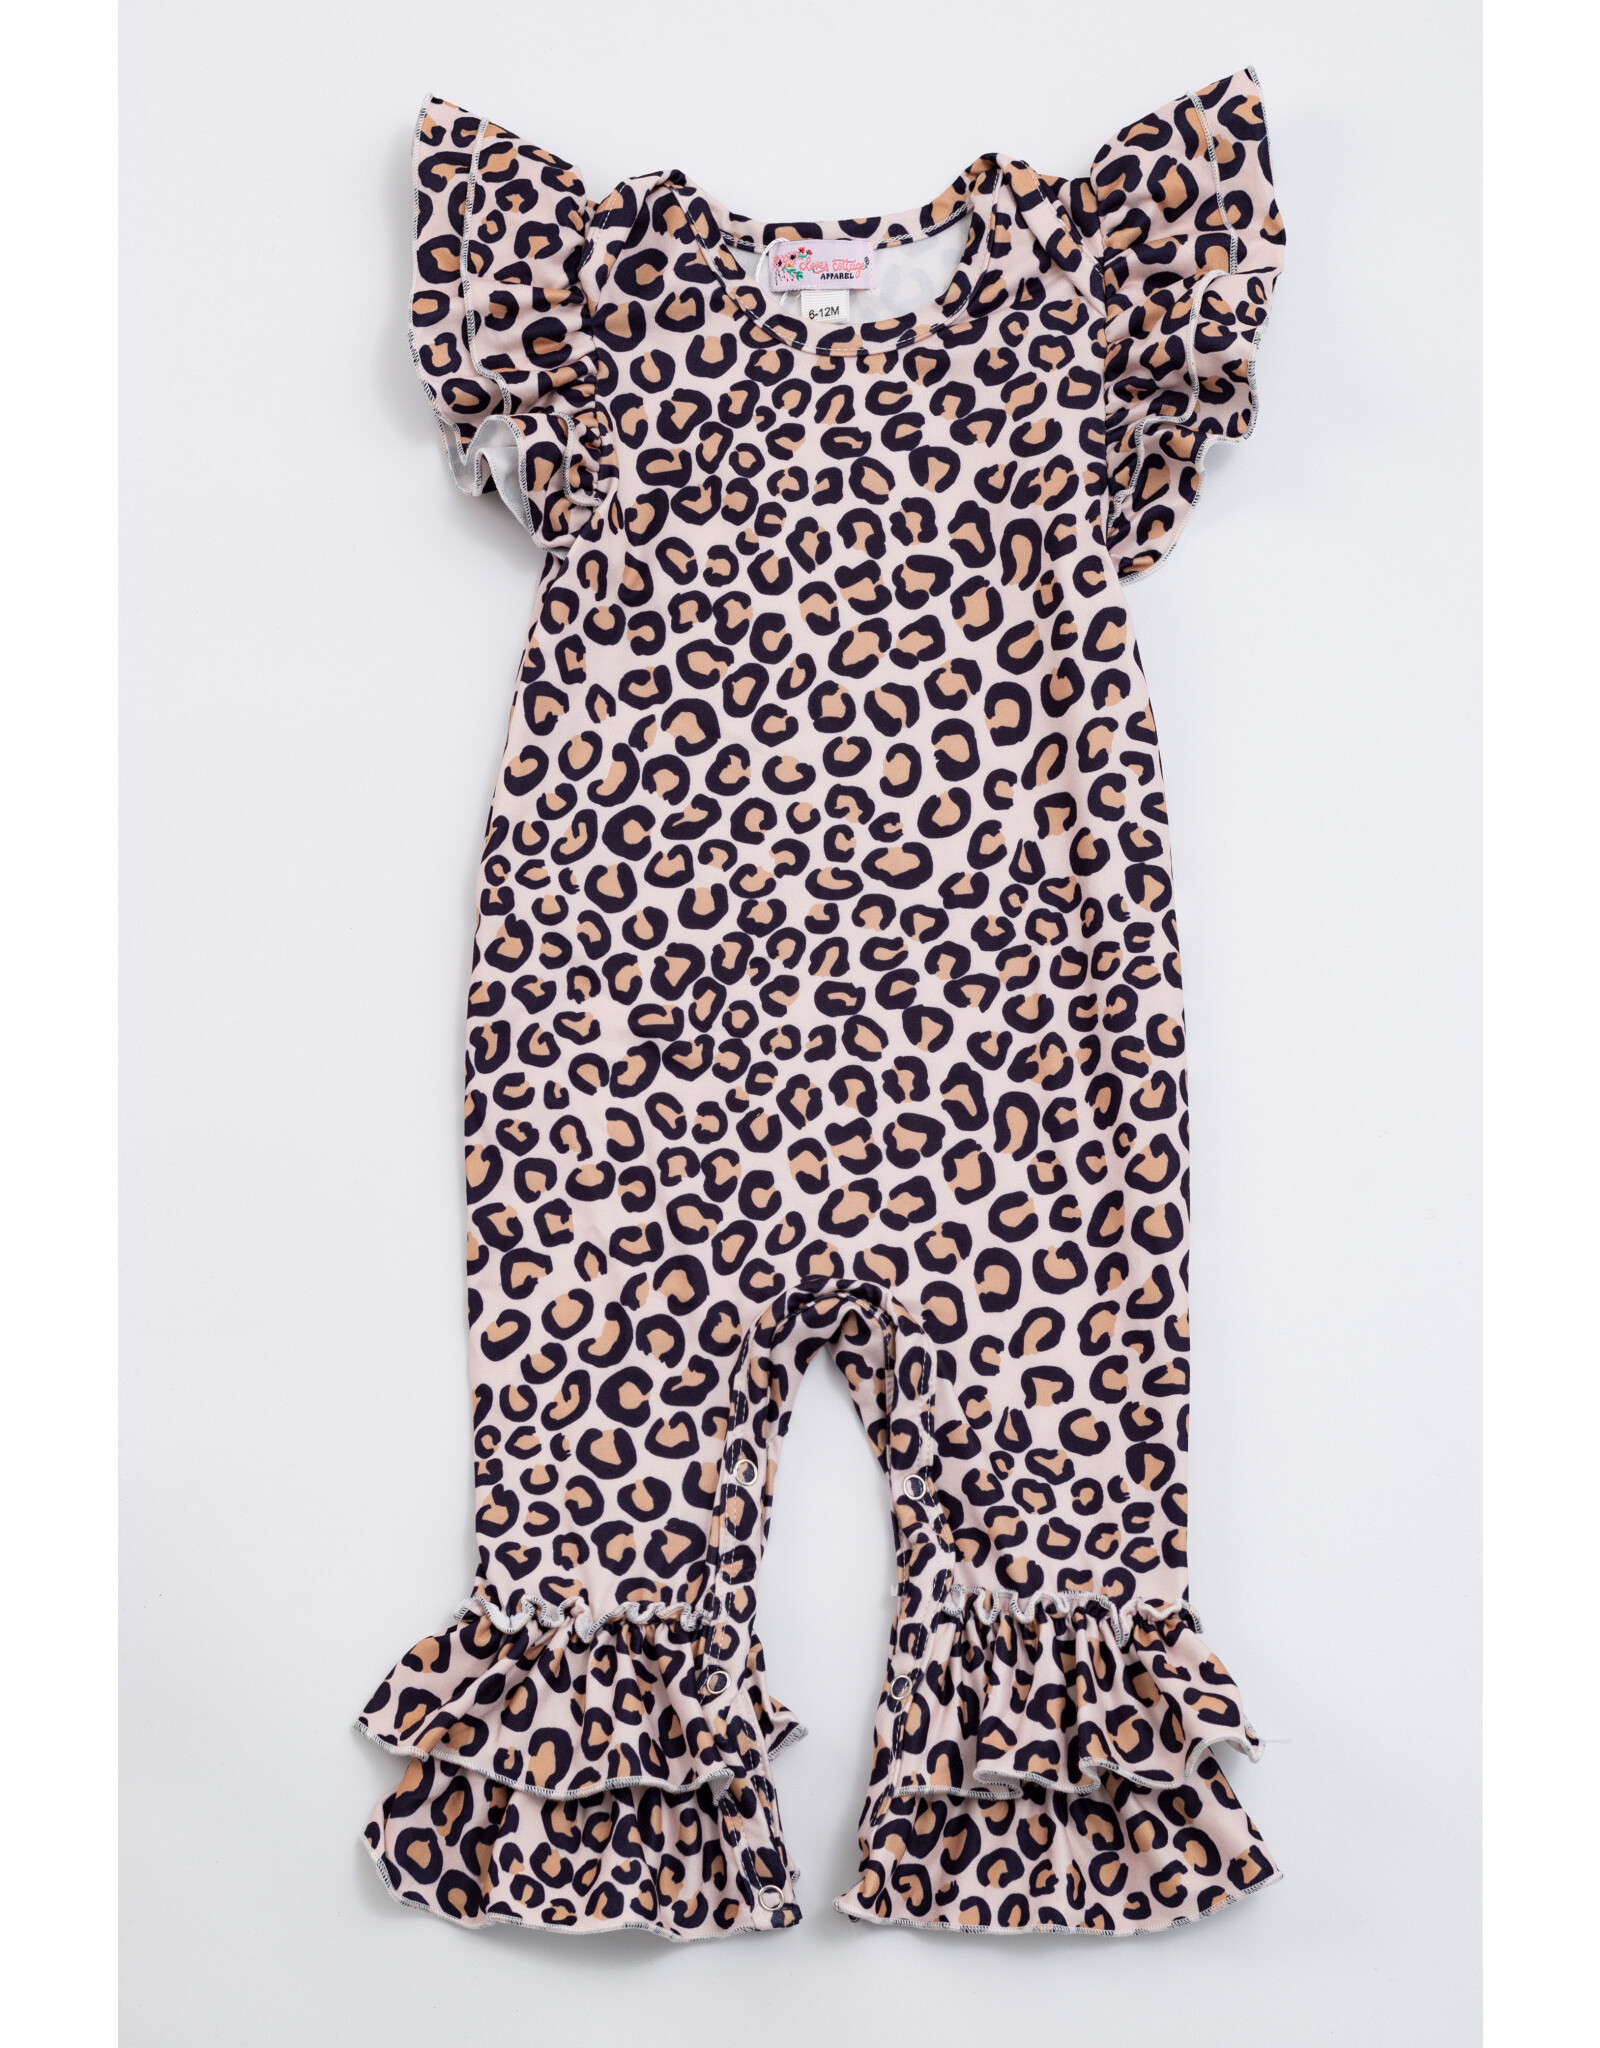 Cheetah Baby romper 0-6 month